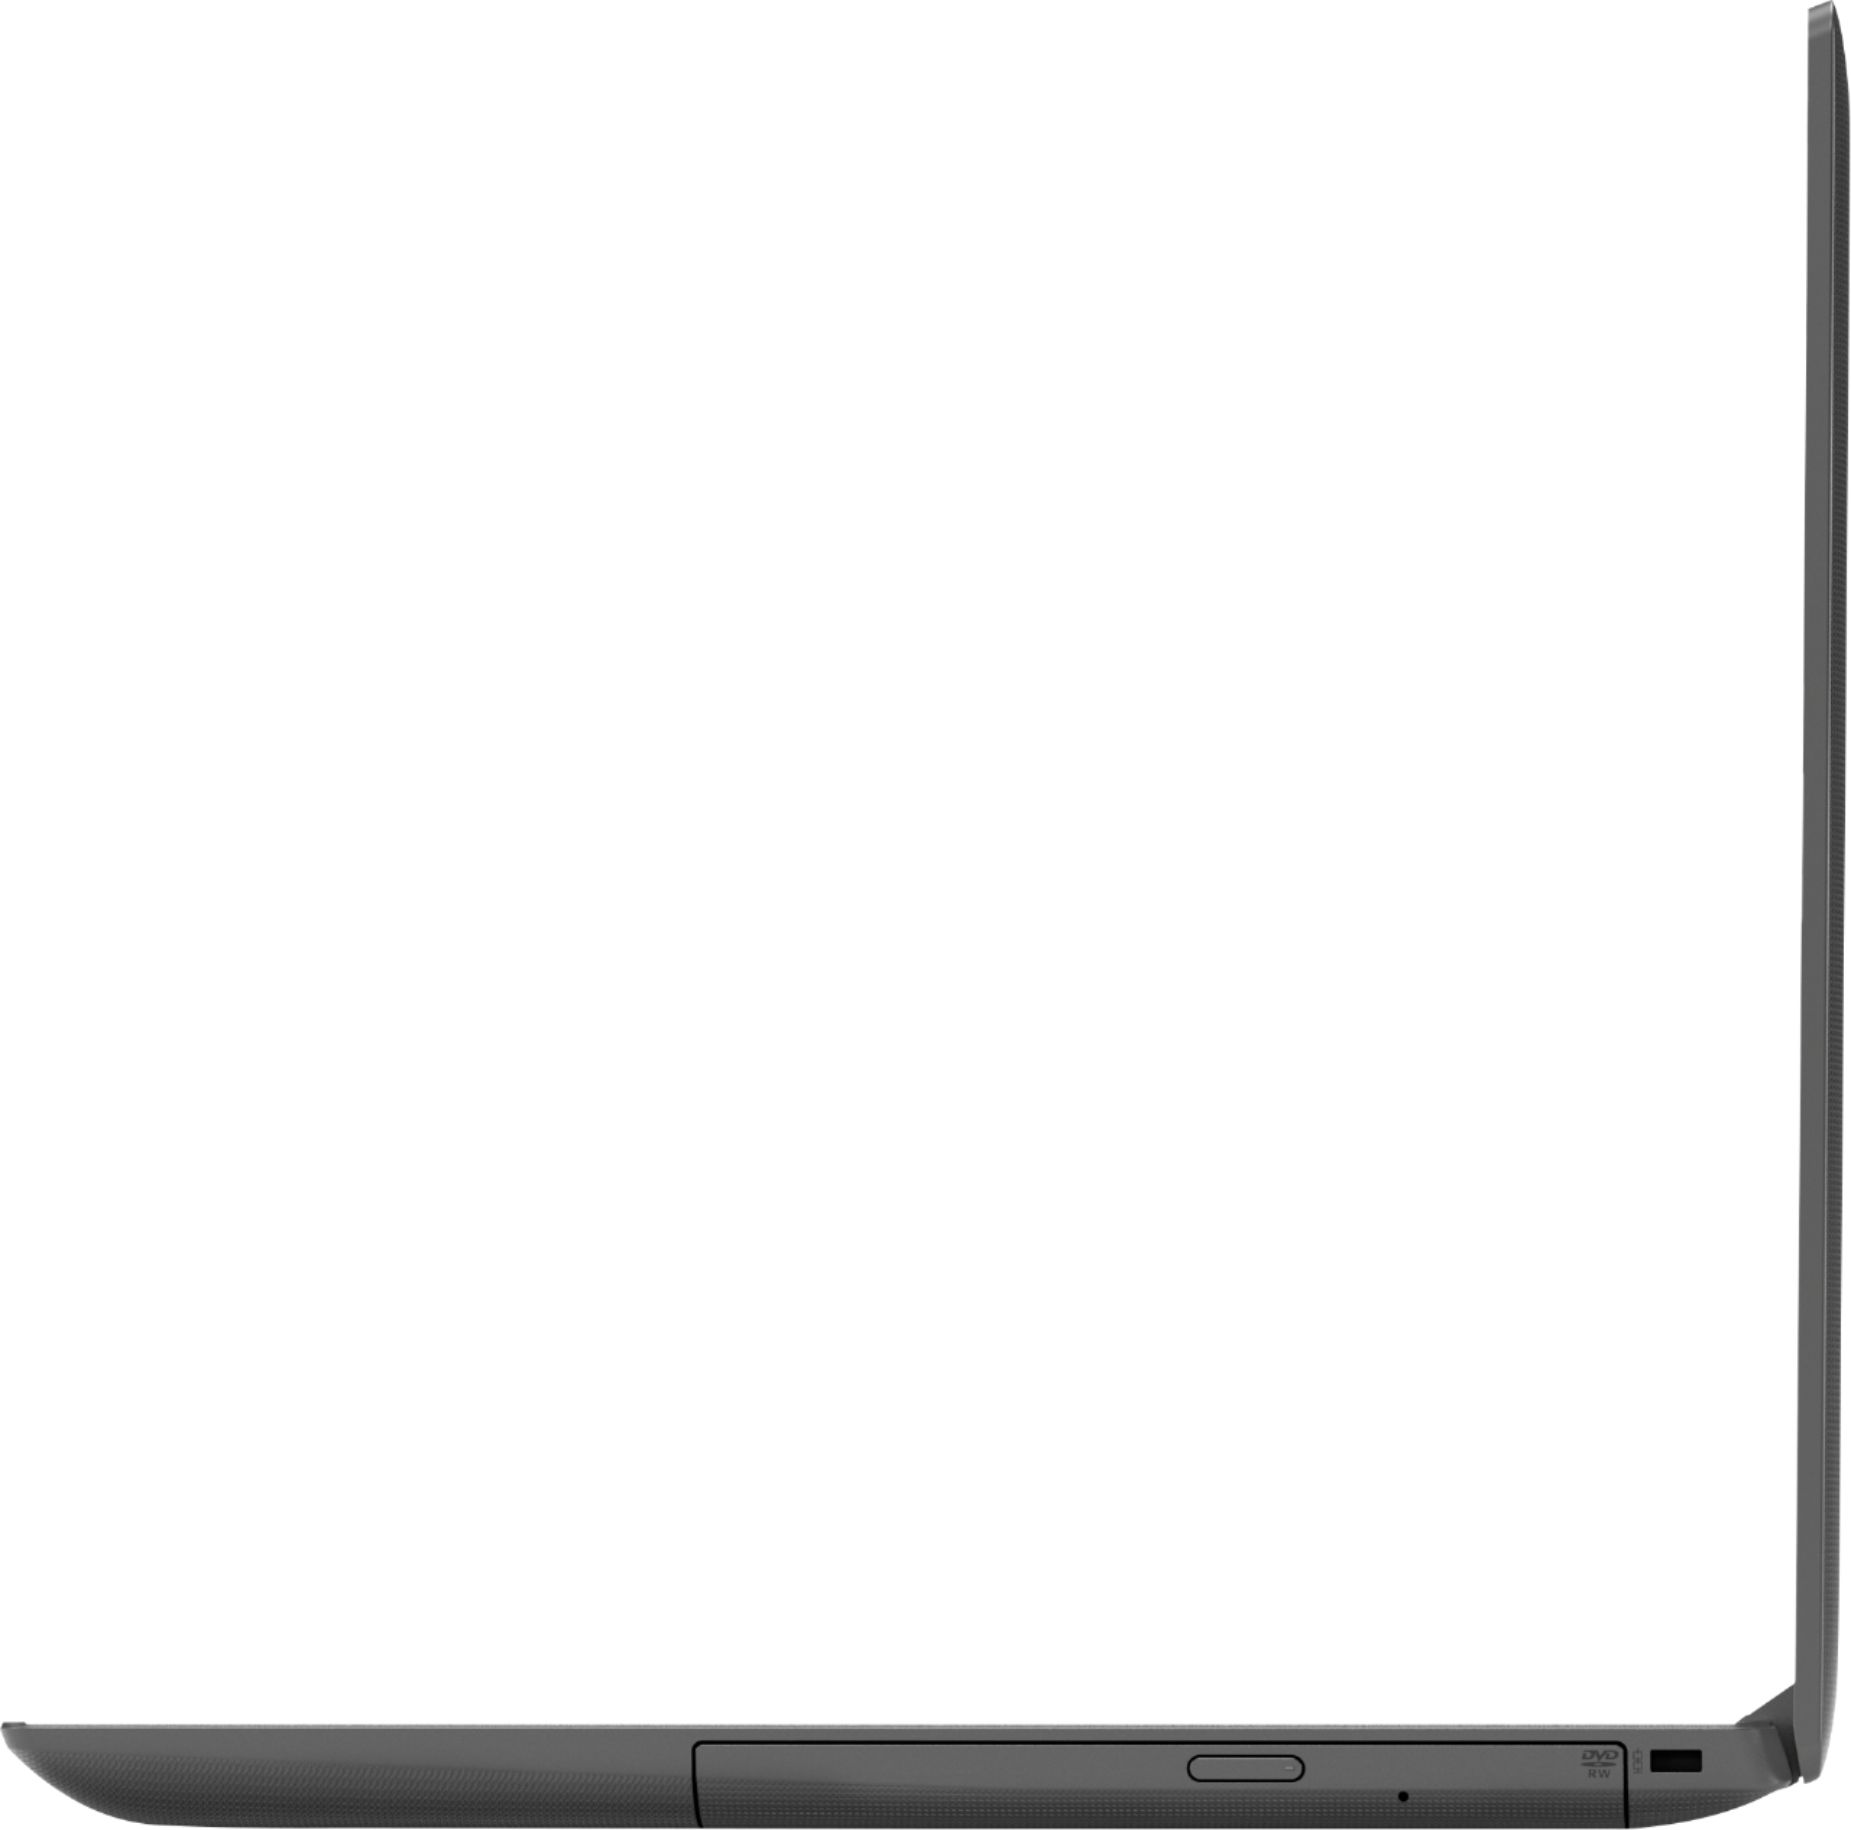 Best Buy Lenovo Ideapad 130 15 6 Laptop Amd A9 Series 4gb Memory